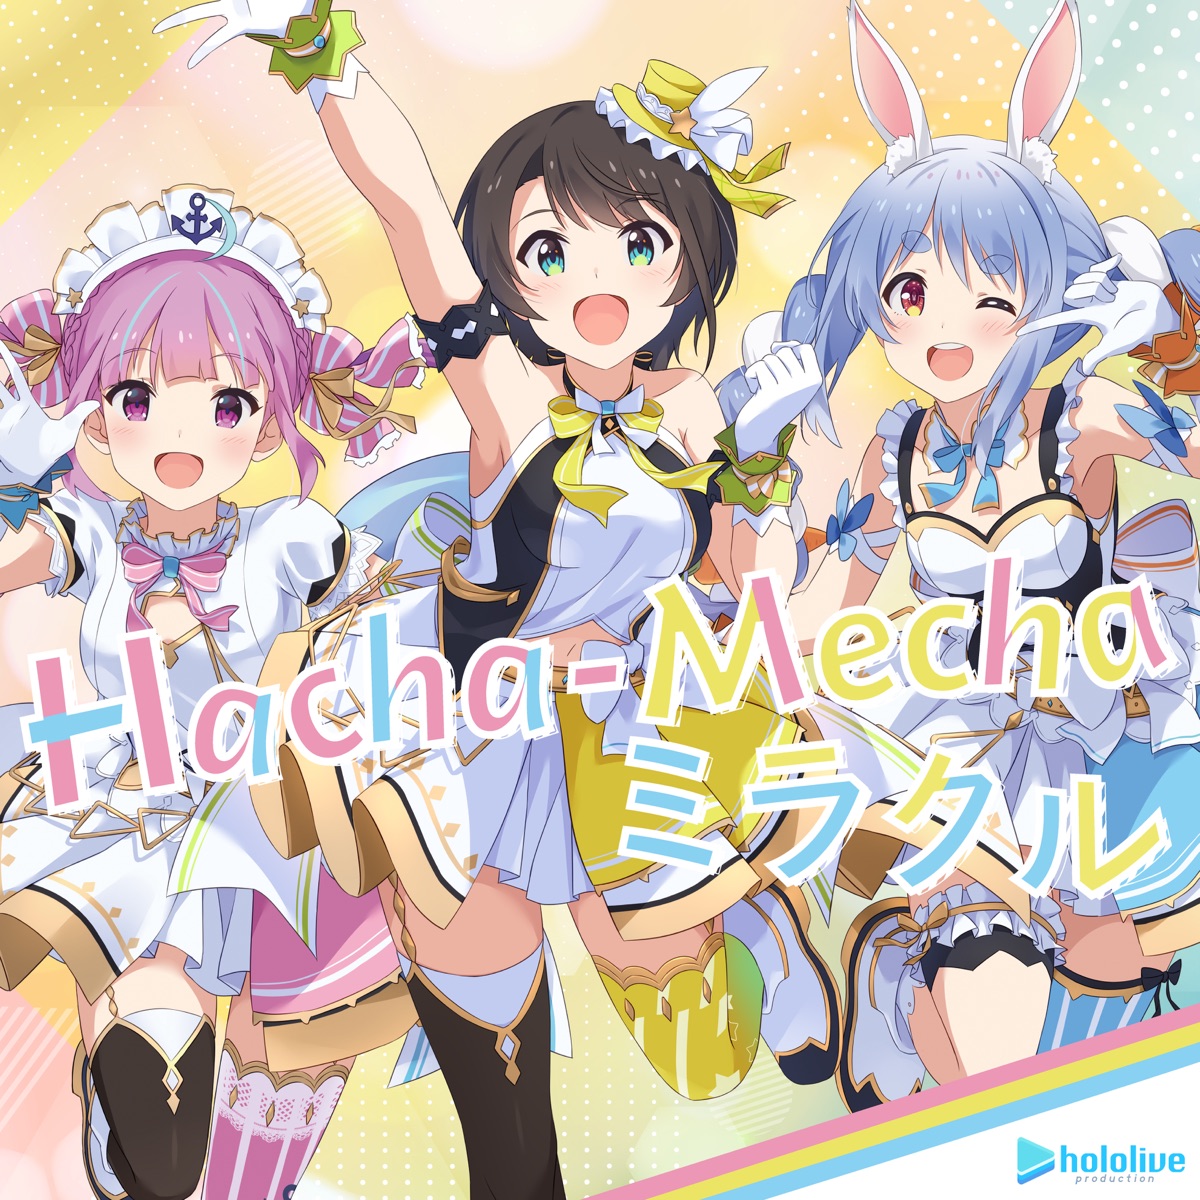 Cover for『Minato Aqua, Oozora Subaru, Usada Pekora - Hacha-Mecha Miracle』from the release『Hacha-Mecha Miracle』